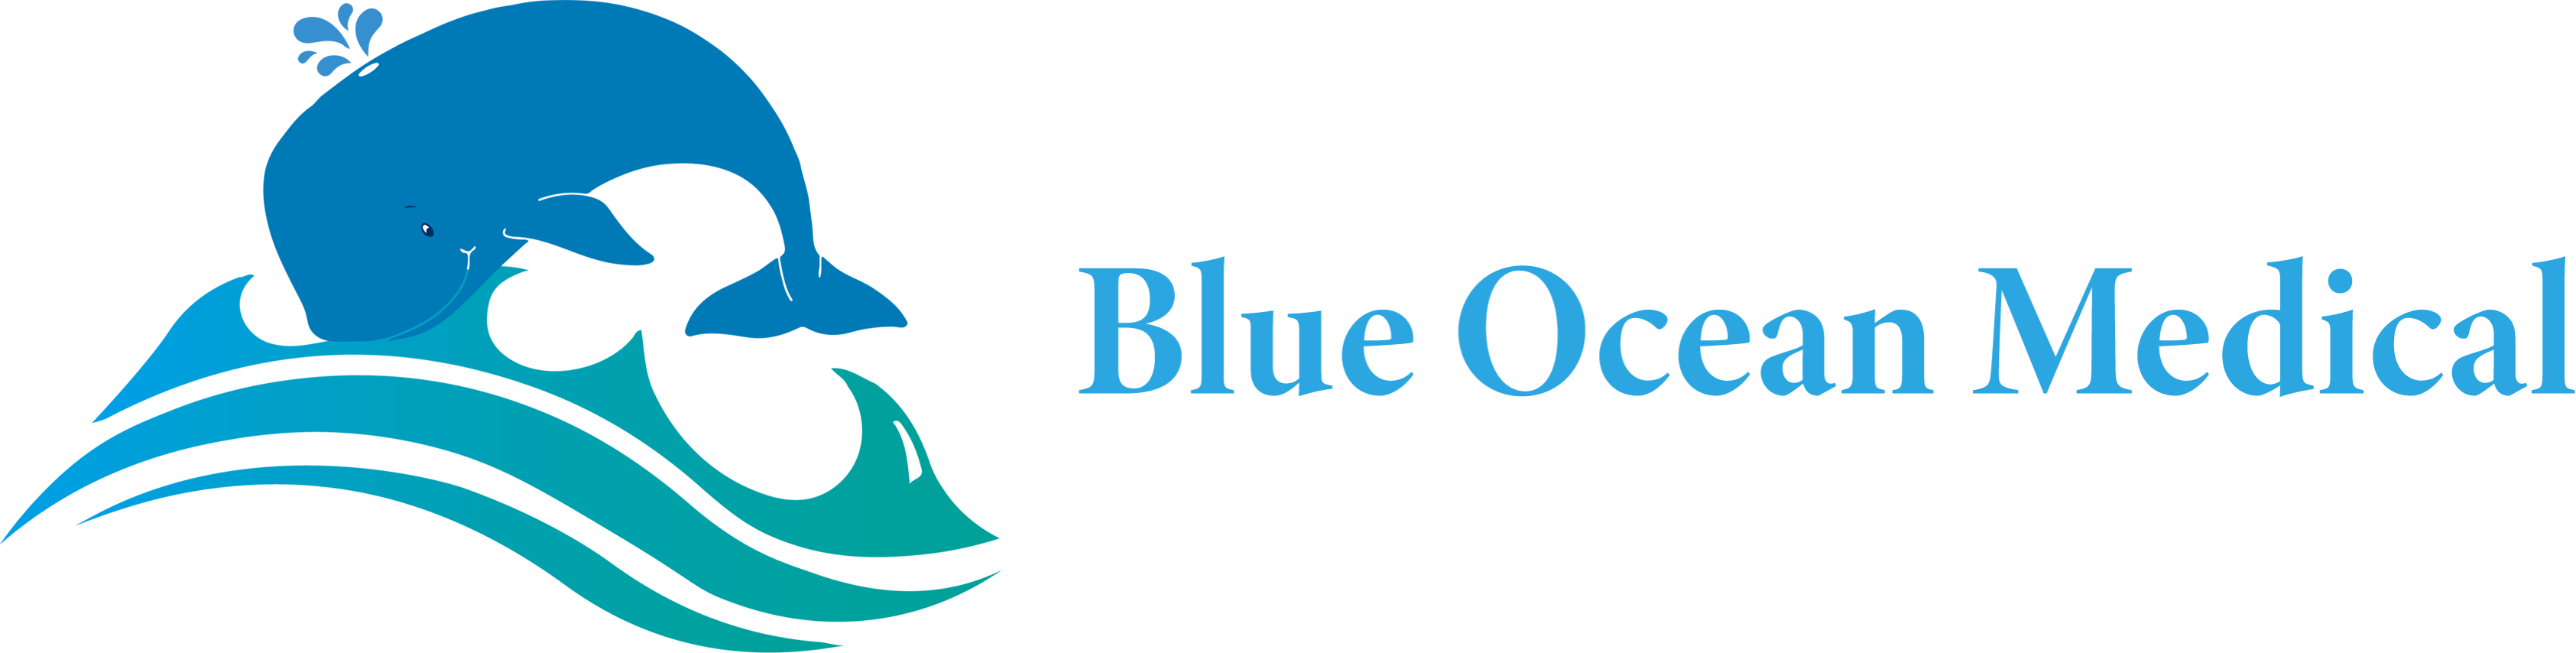 Blue Ocean Medical